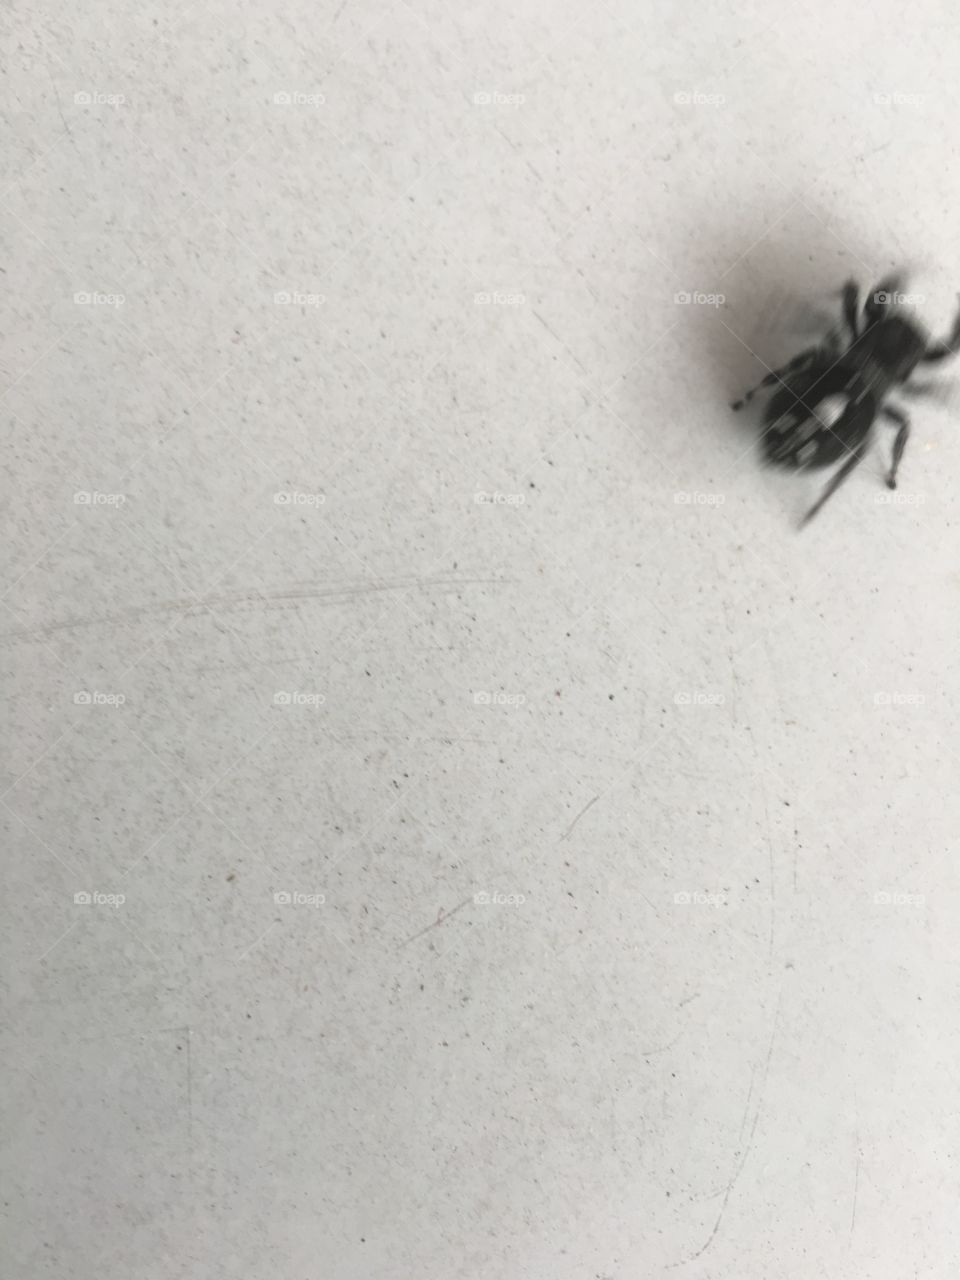 Creepy Crawley black and white spider